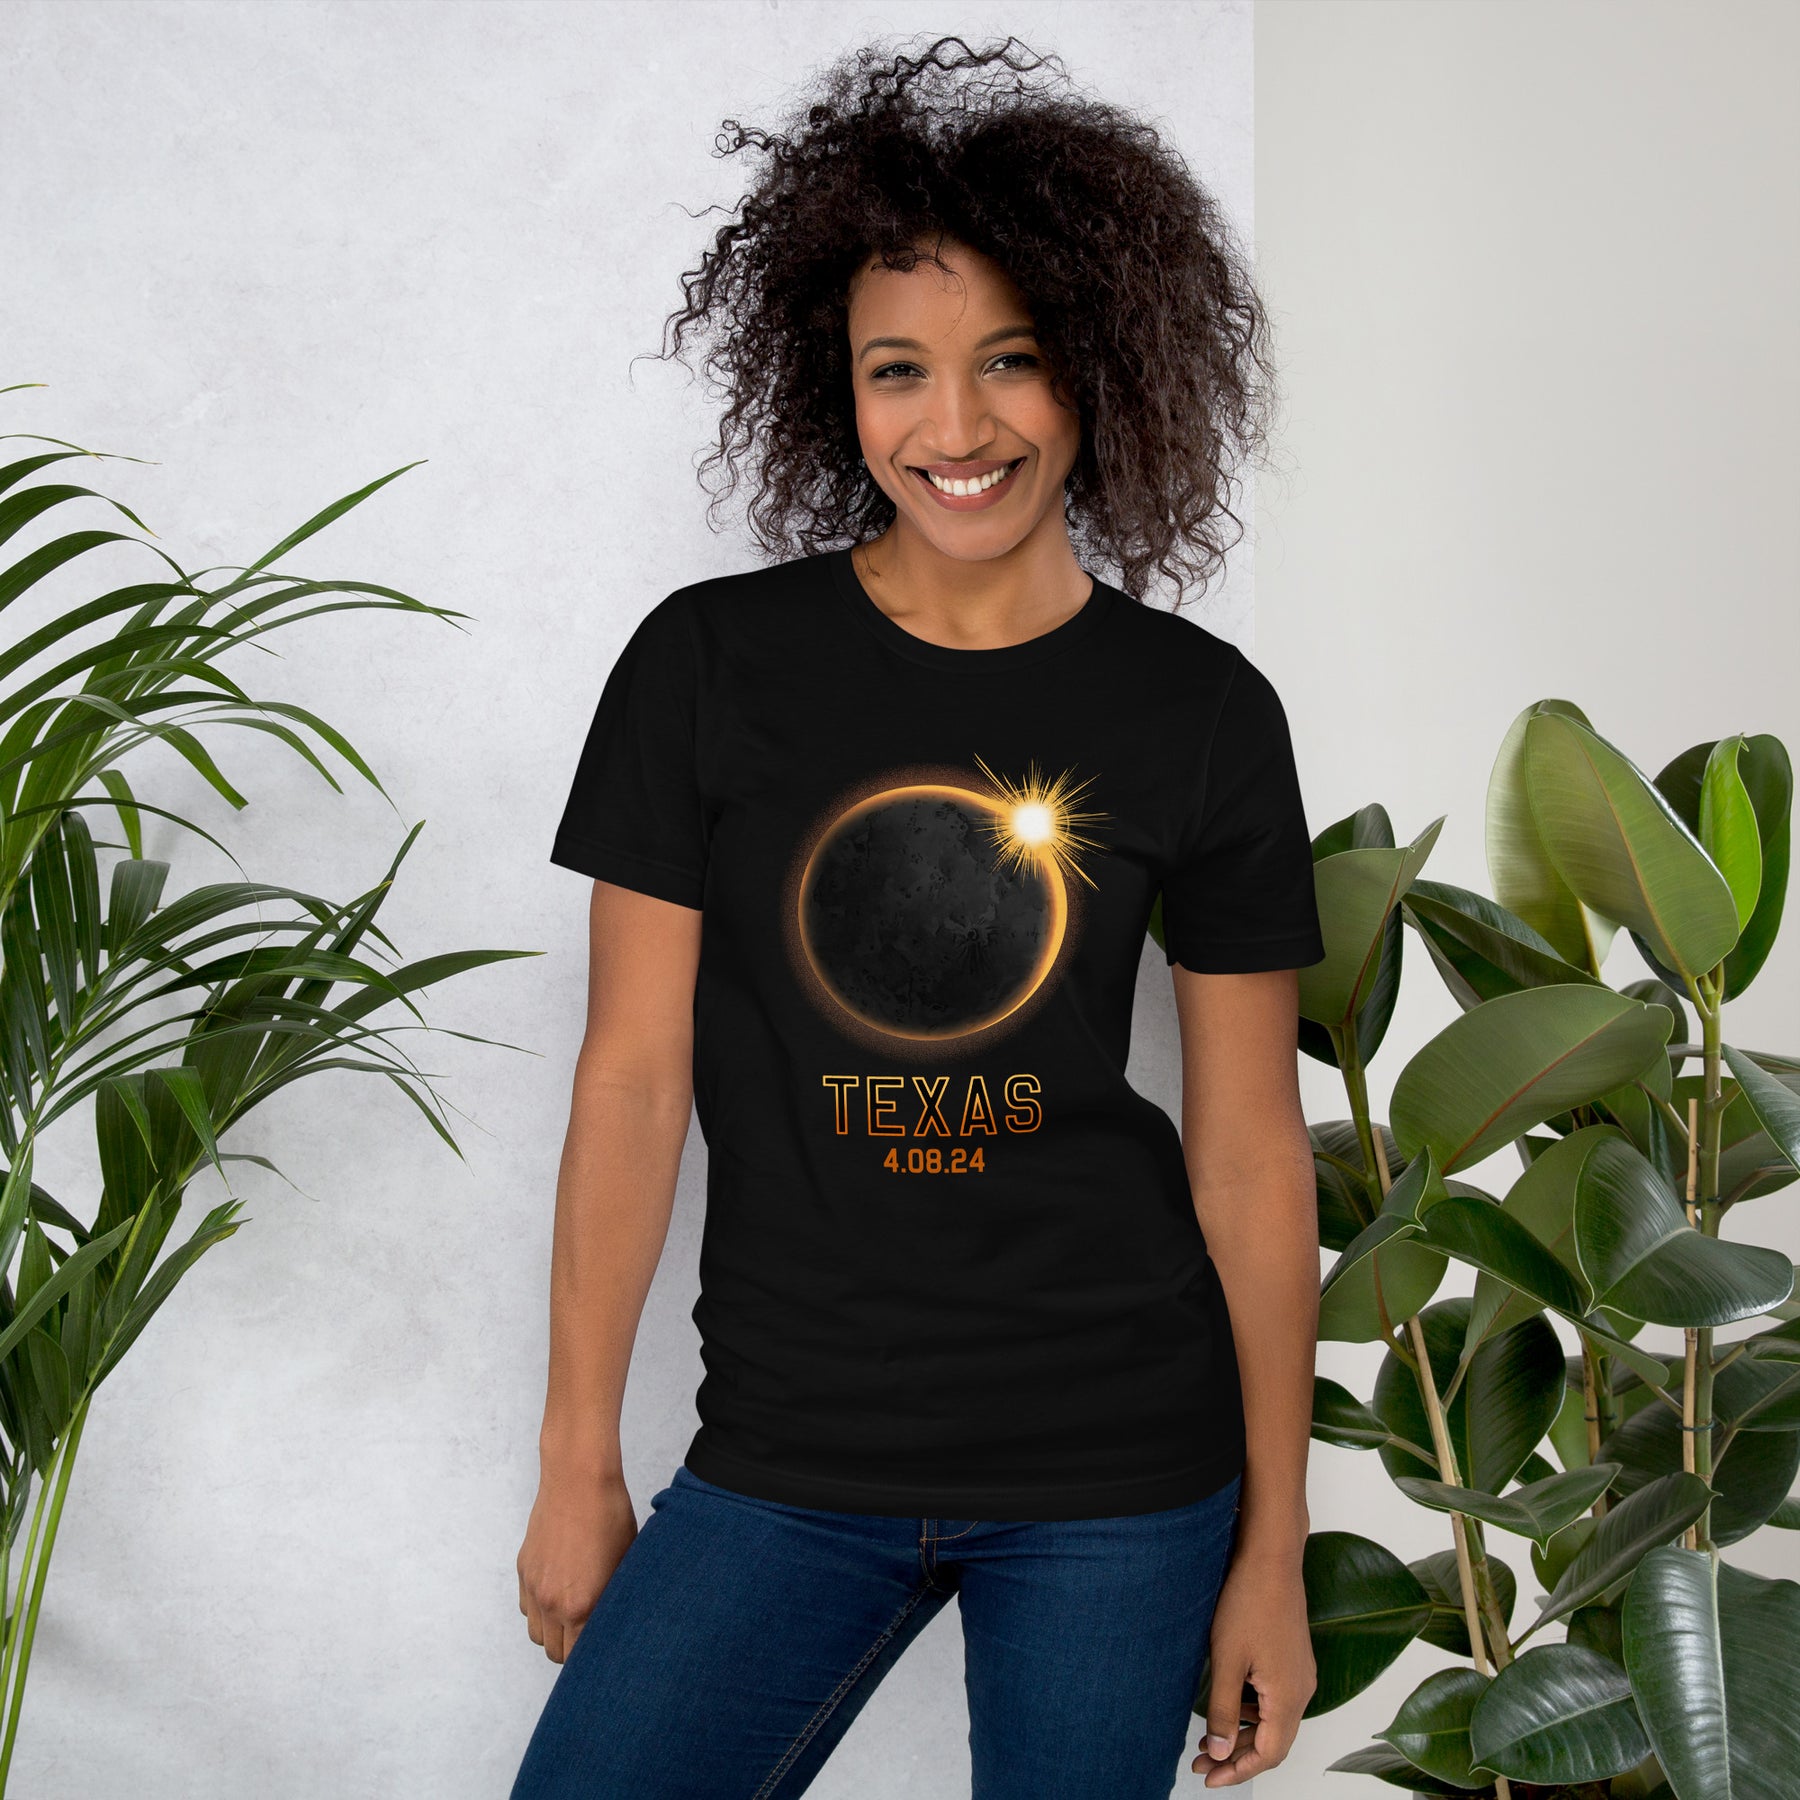 Custom State Great US American Eclipse 2024 Shirt - Total Solar Eclipse Souvenir